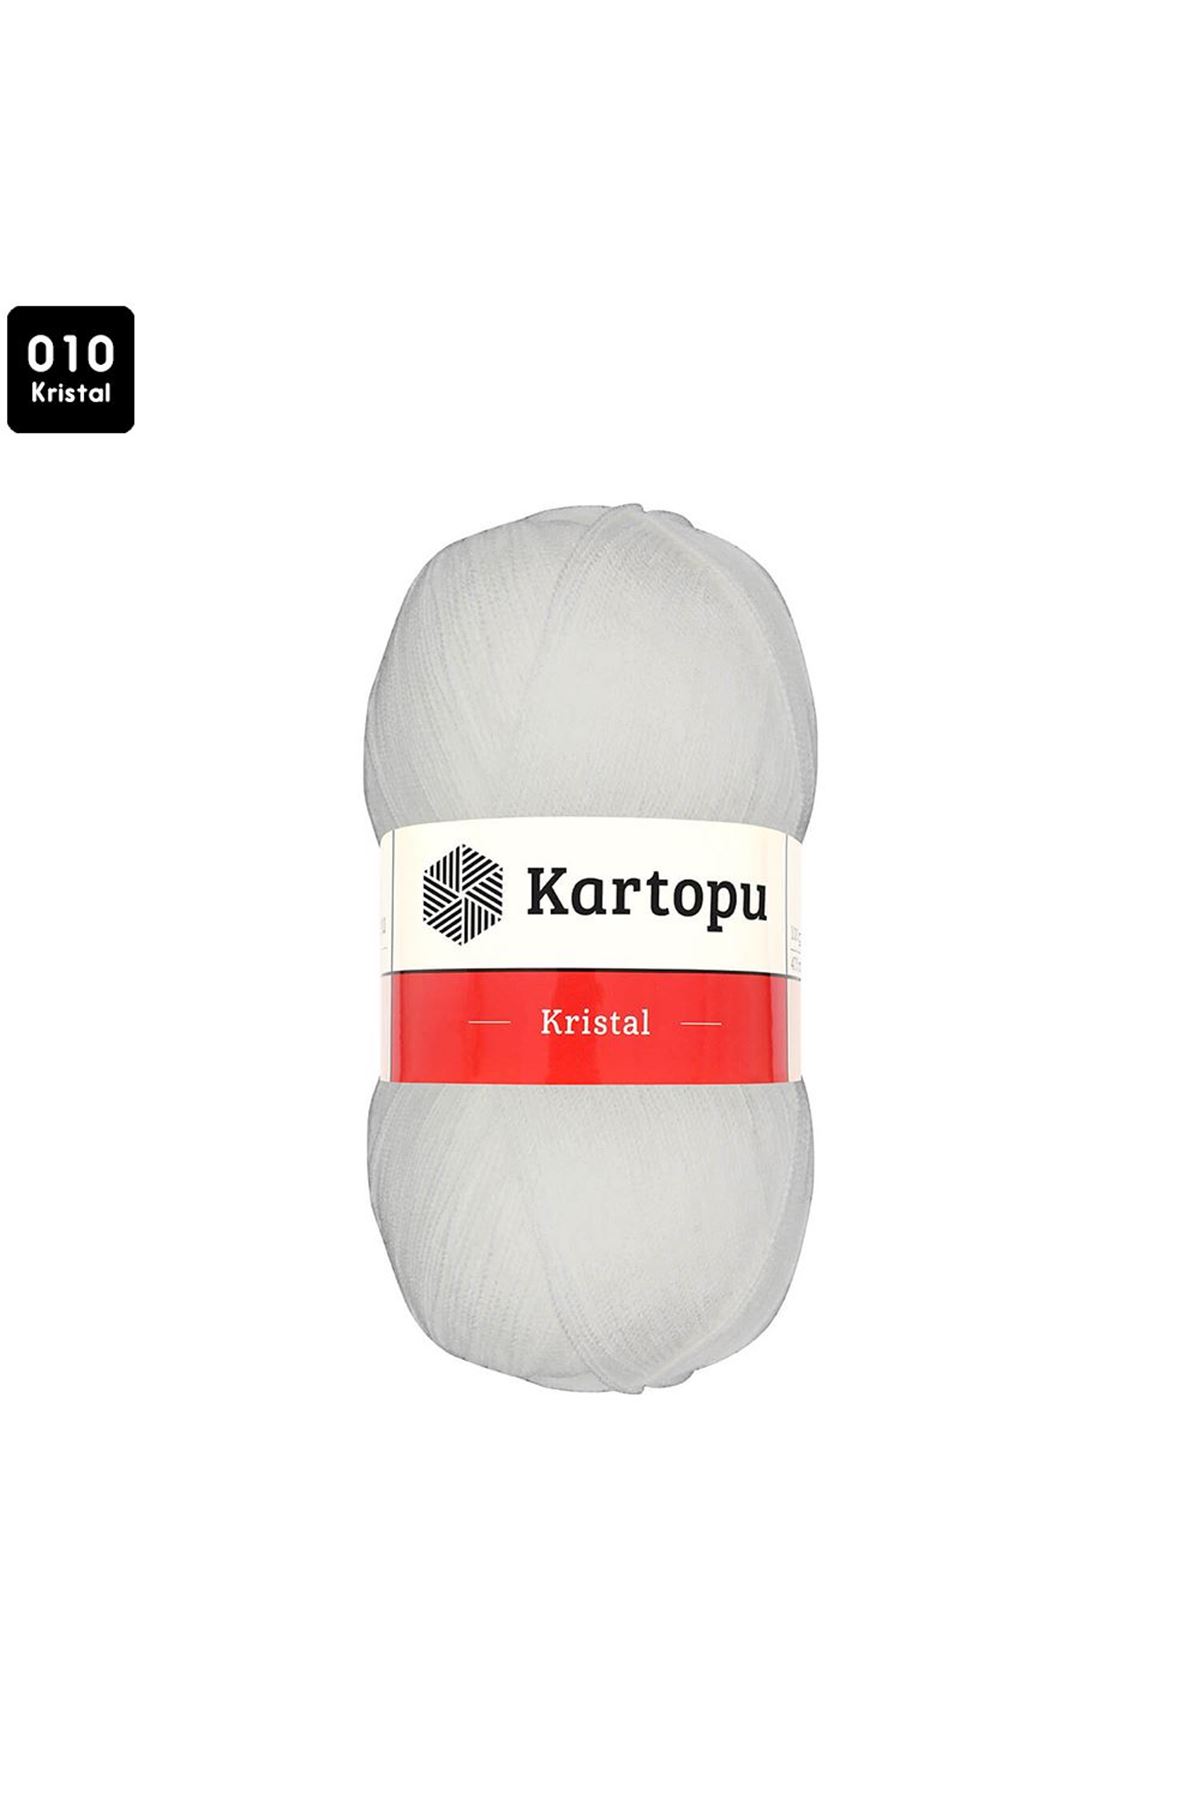 Kartopu Kristal - Renk No: 010